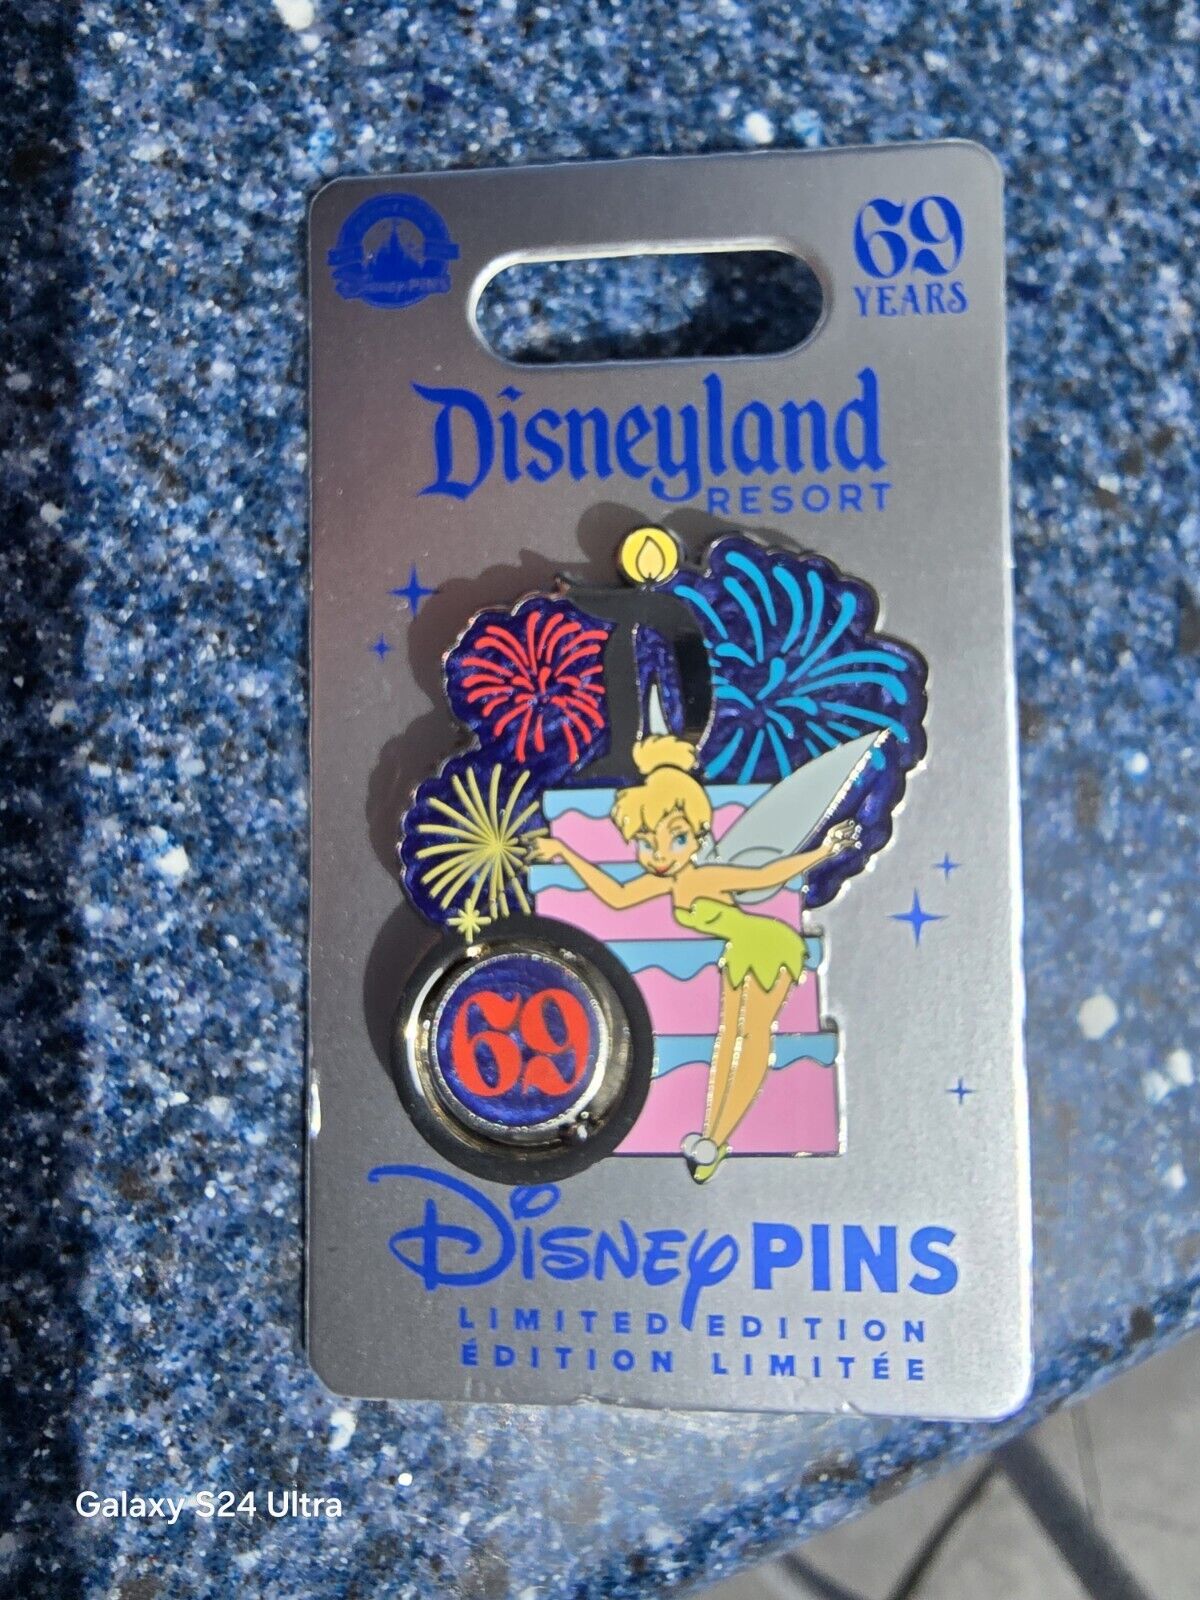 Disneyland 69th Anniversary Birthday pin Disney Parks Limited Edition